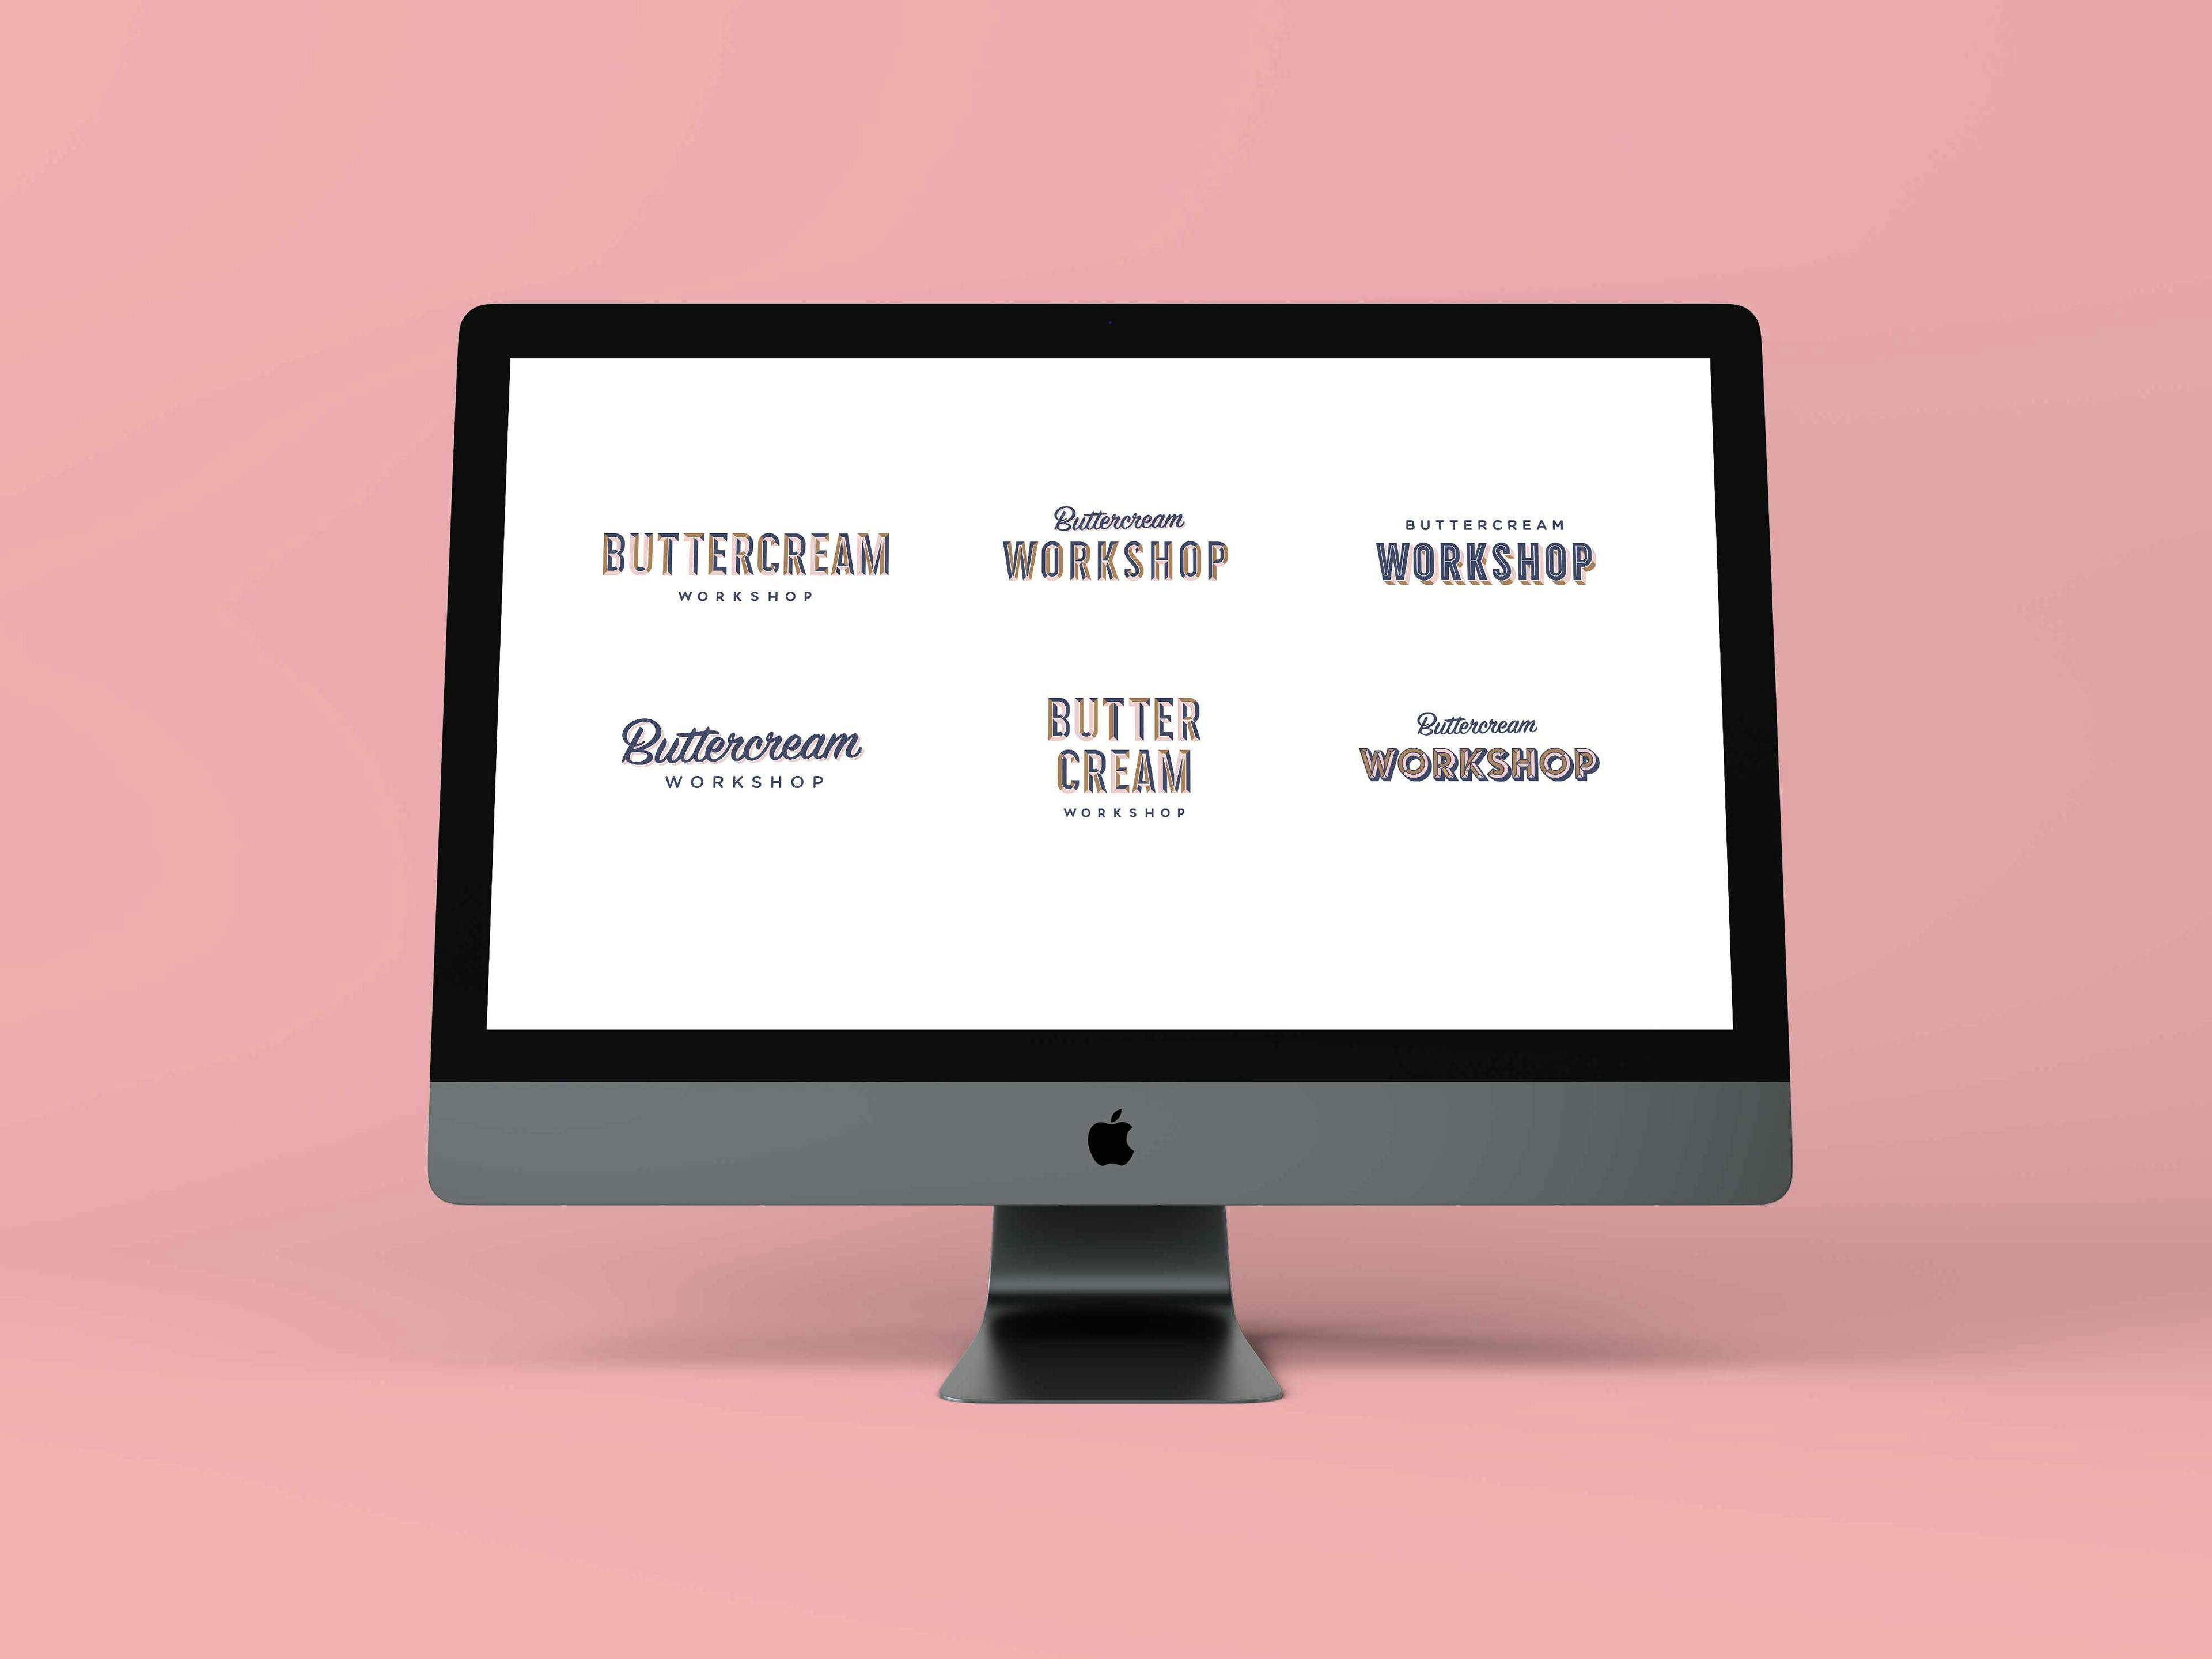 Buttercream Workshop Initial Concept Design